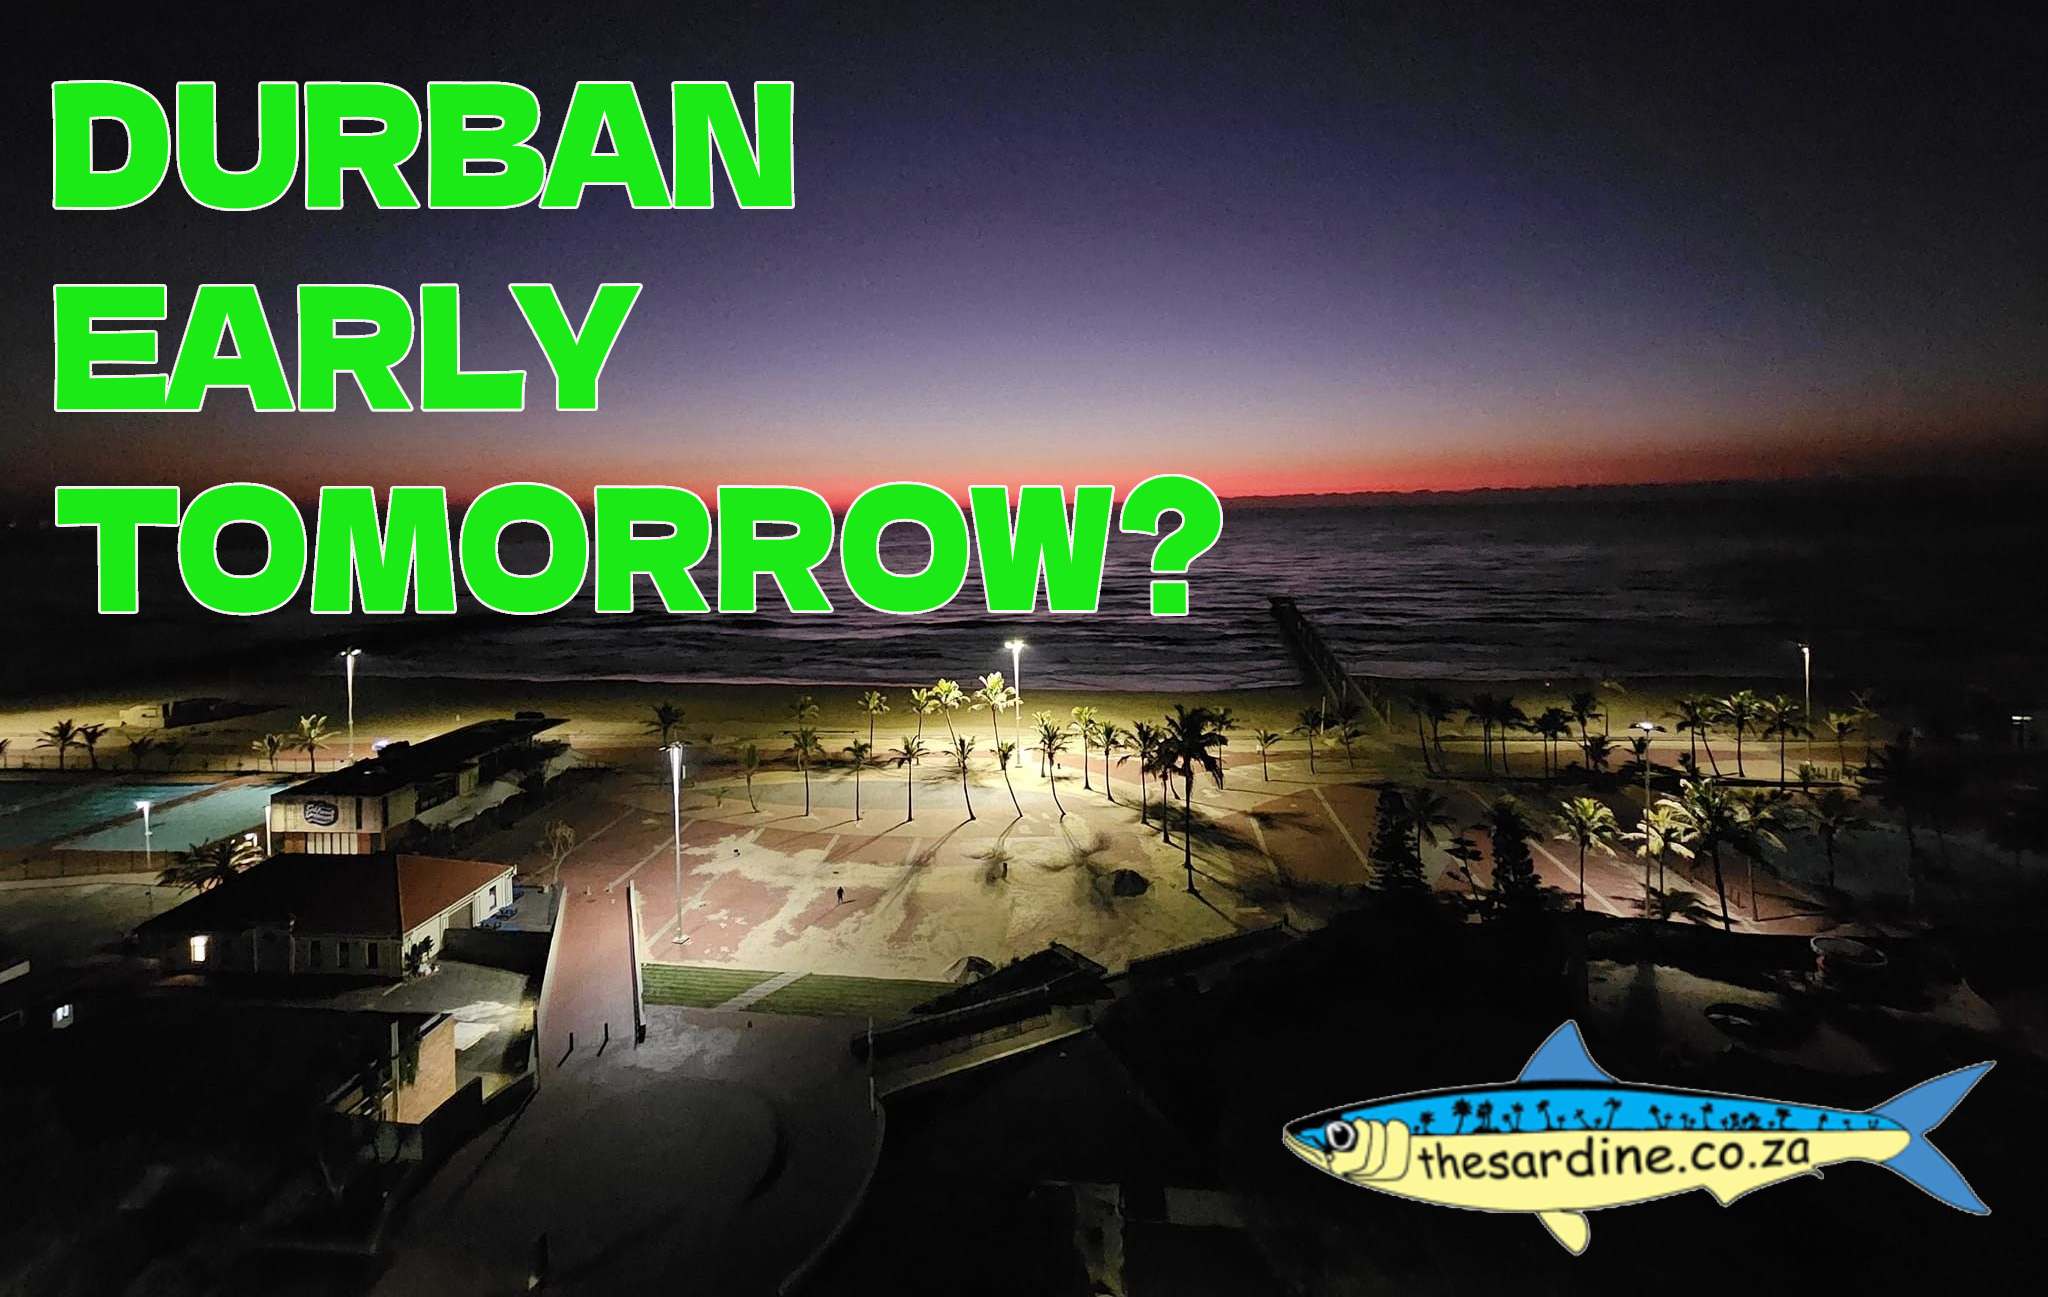 Sardines in Durban Tomorrow? - The Sardine News